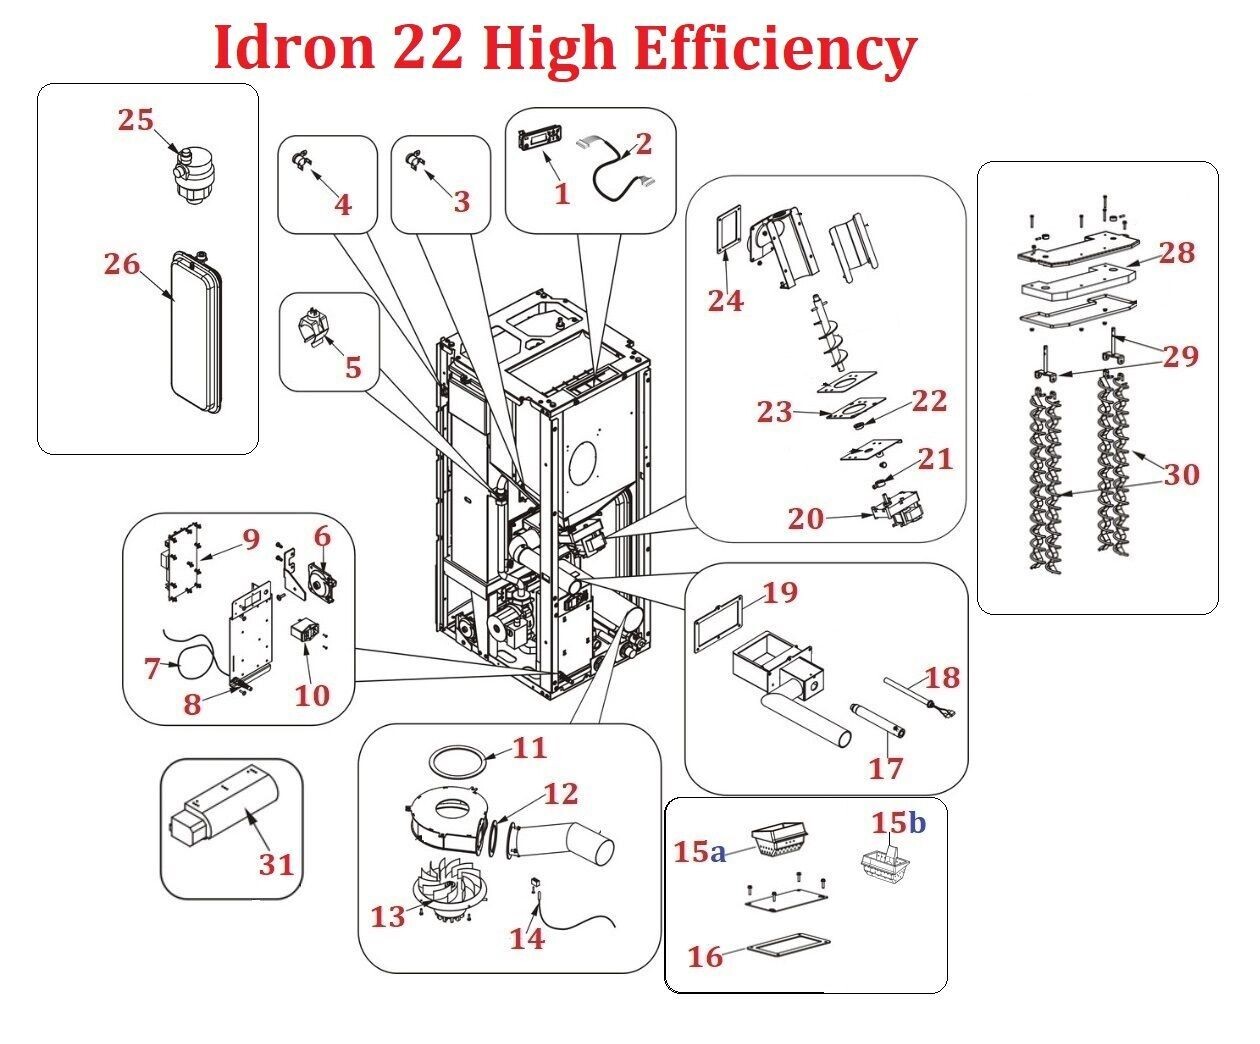 Idron 22 High Efficiency